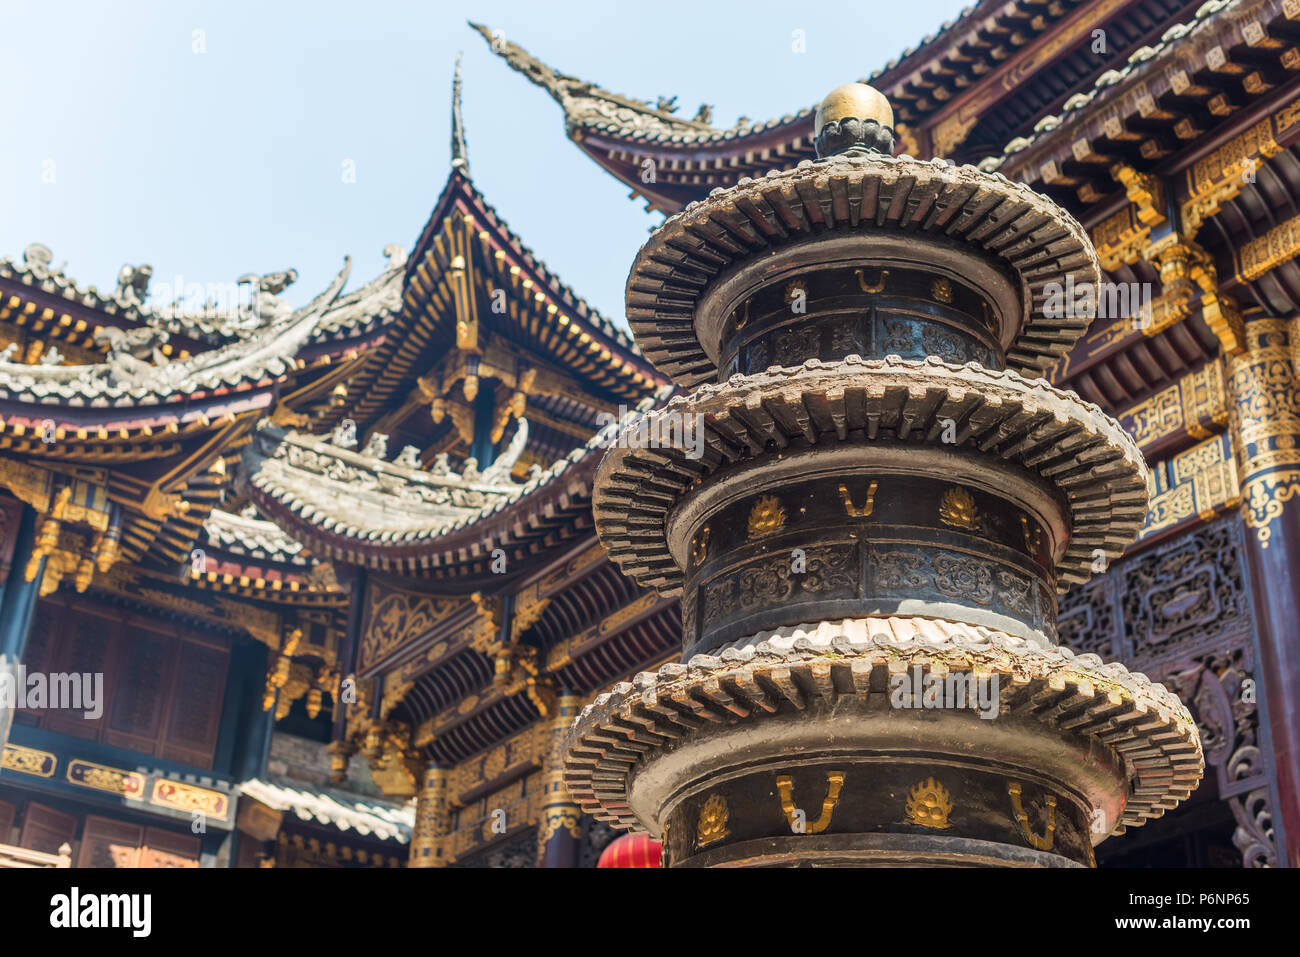 Architettura tradizionale cinese dettagli nel tempio BaoLunSi Chongqing Cina Foto Stock